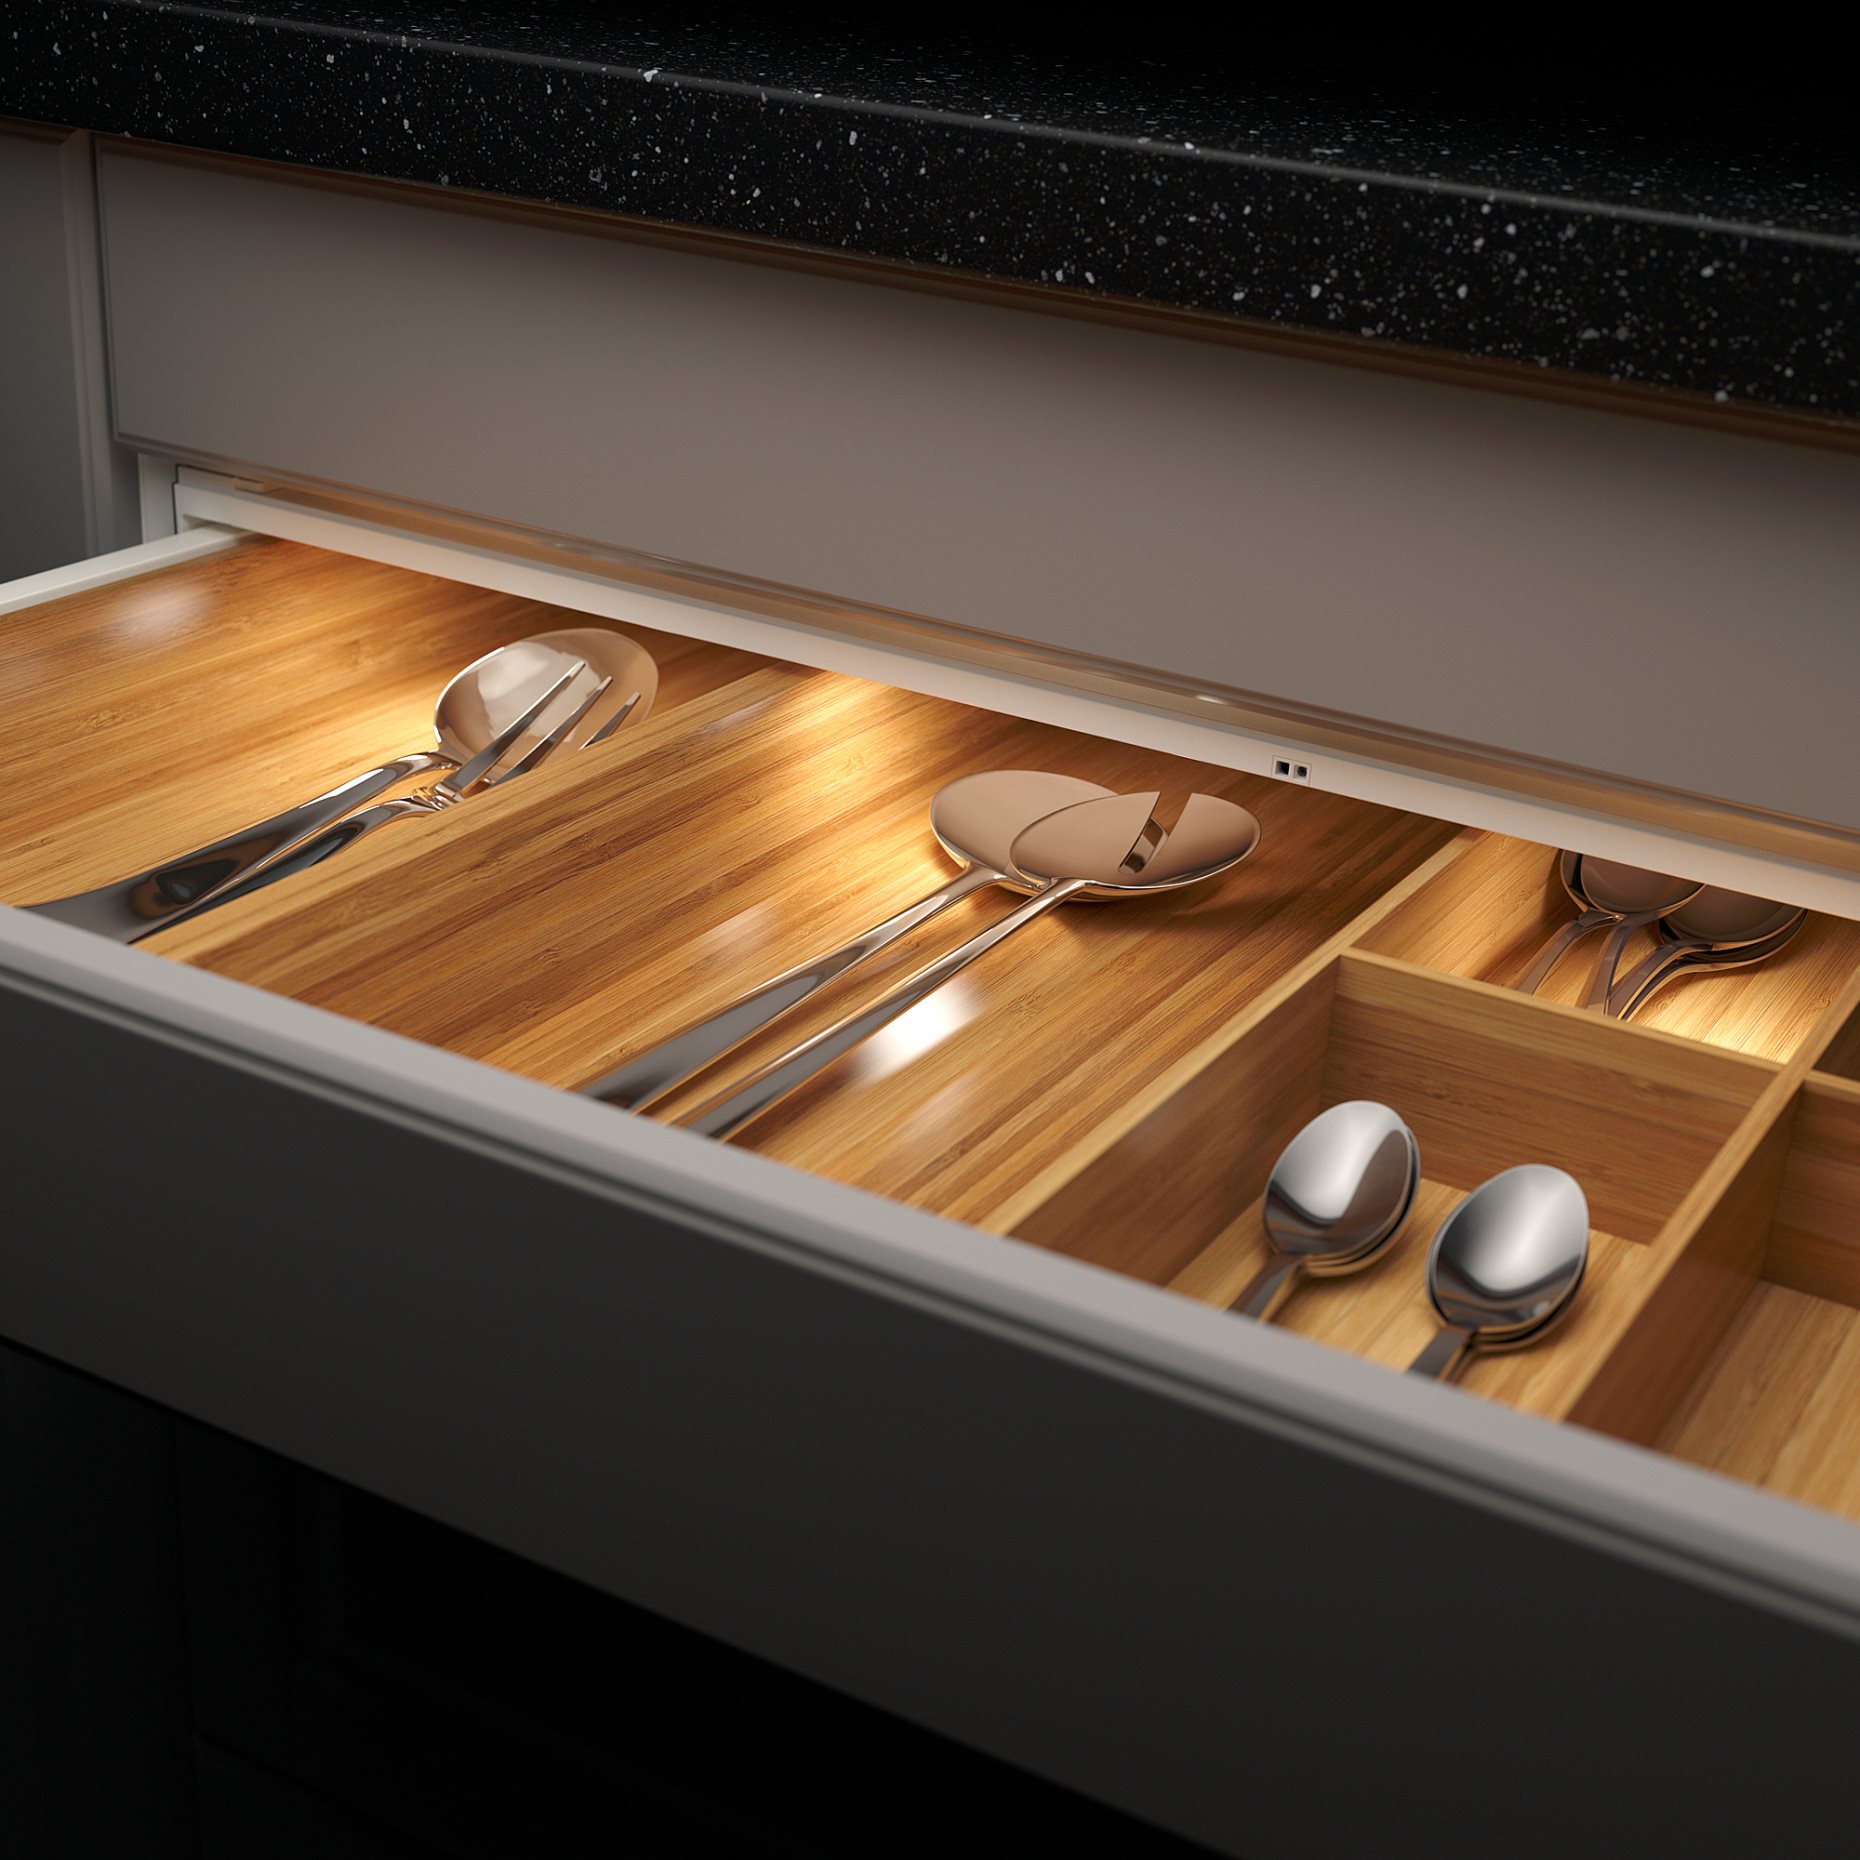 MITTLED, kitchen drawer lighting with built-in LED light source and sensor, 76 cm, 705.292.10